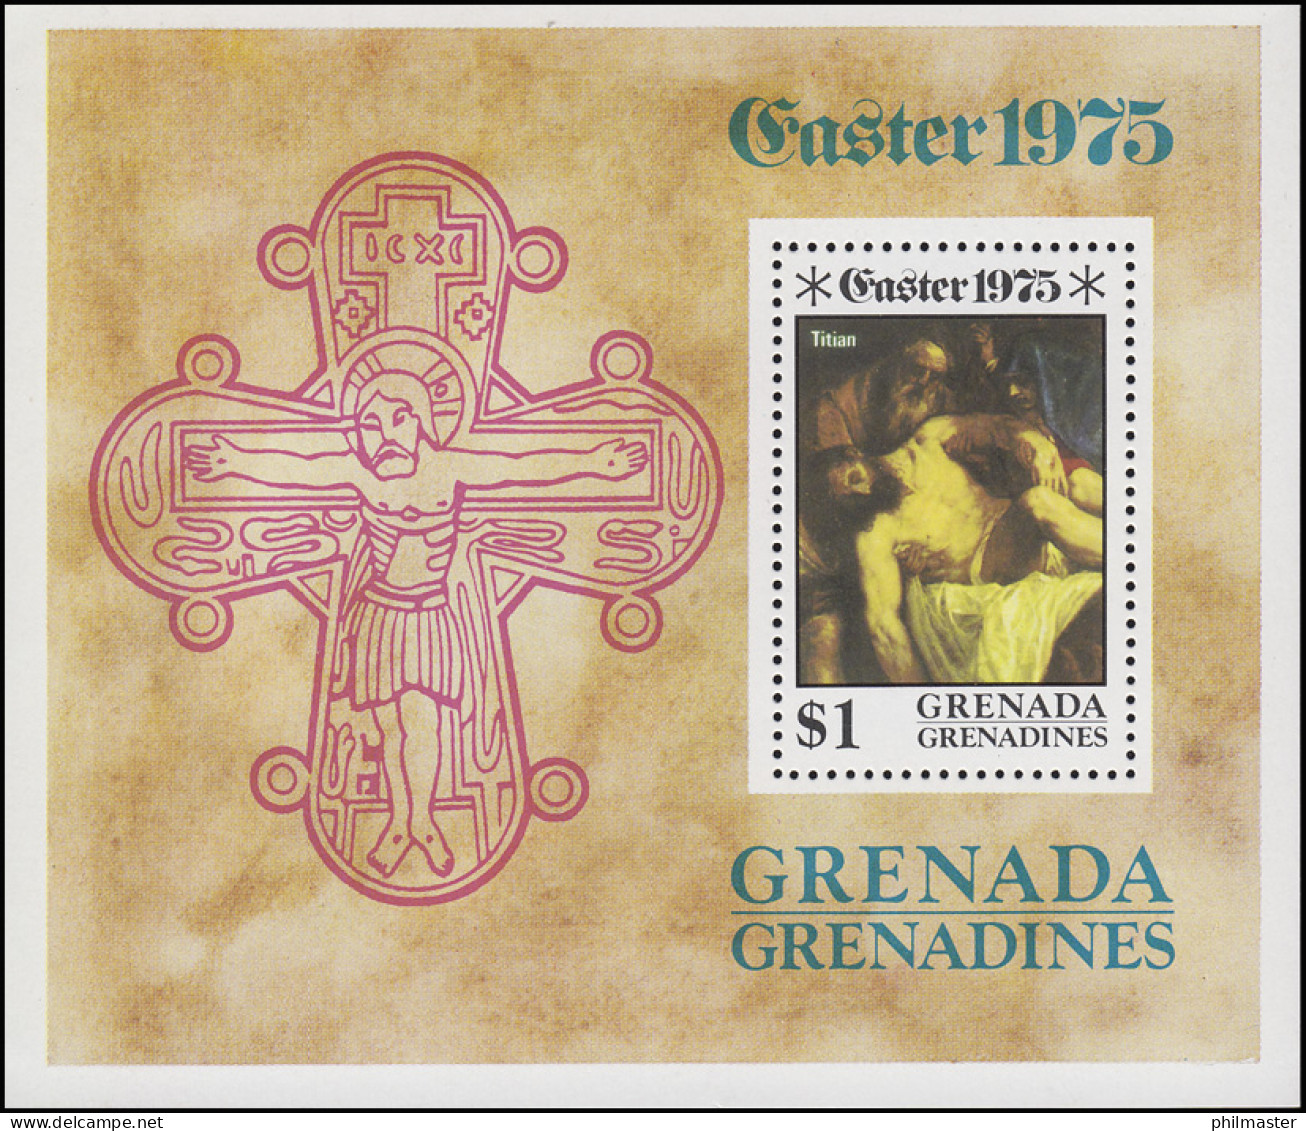 Grenadines: Ostern Easter - Die Kreuzigung Christi 1975, Block ** - Christendom